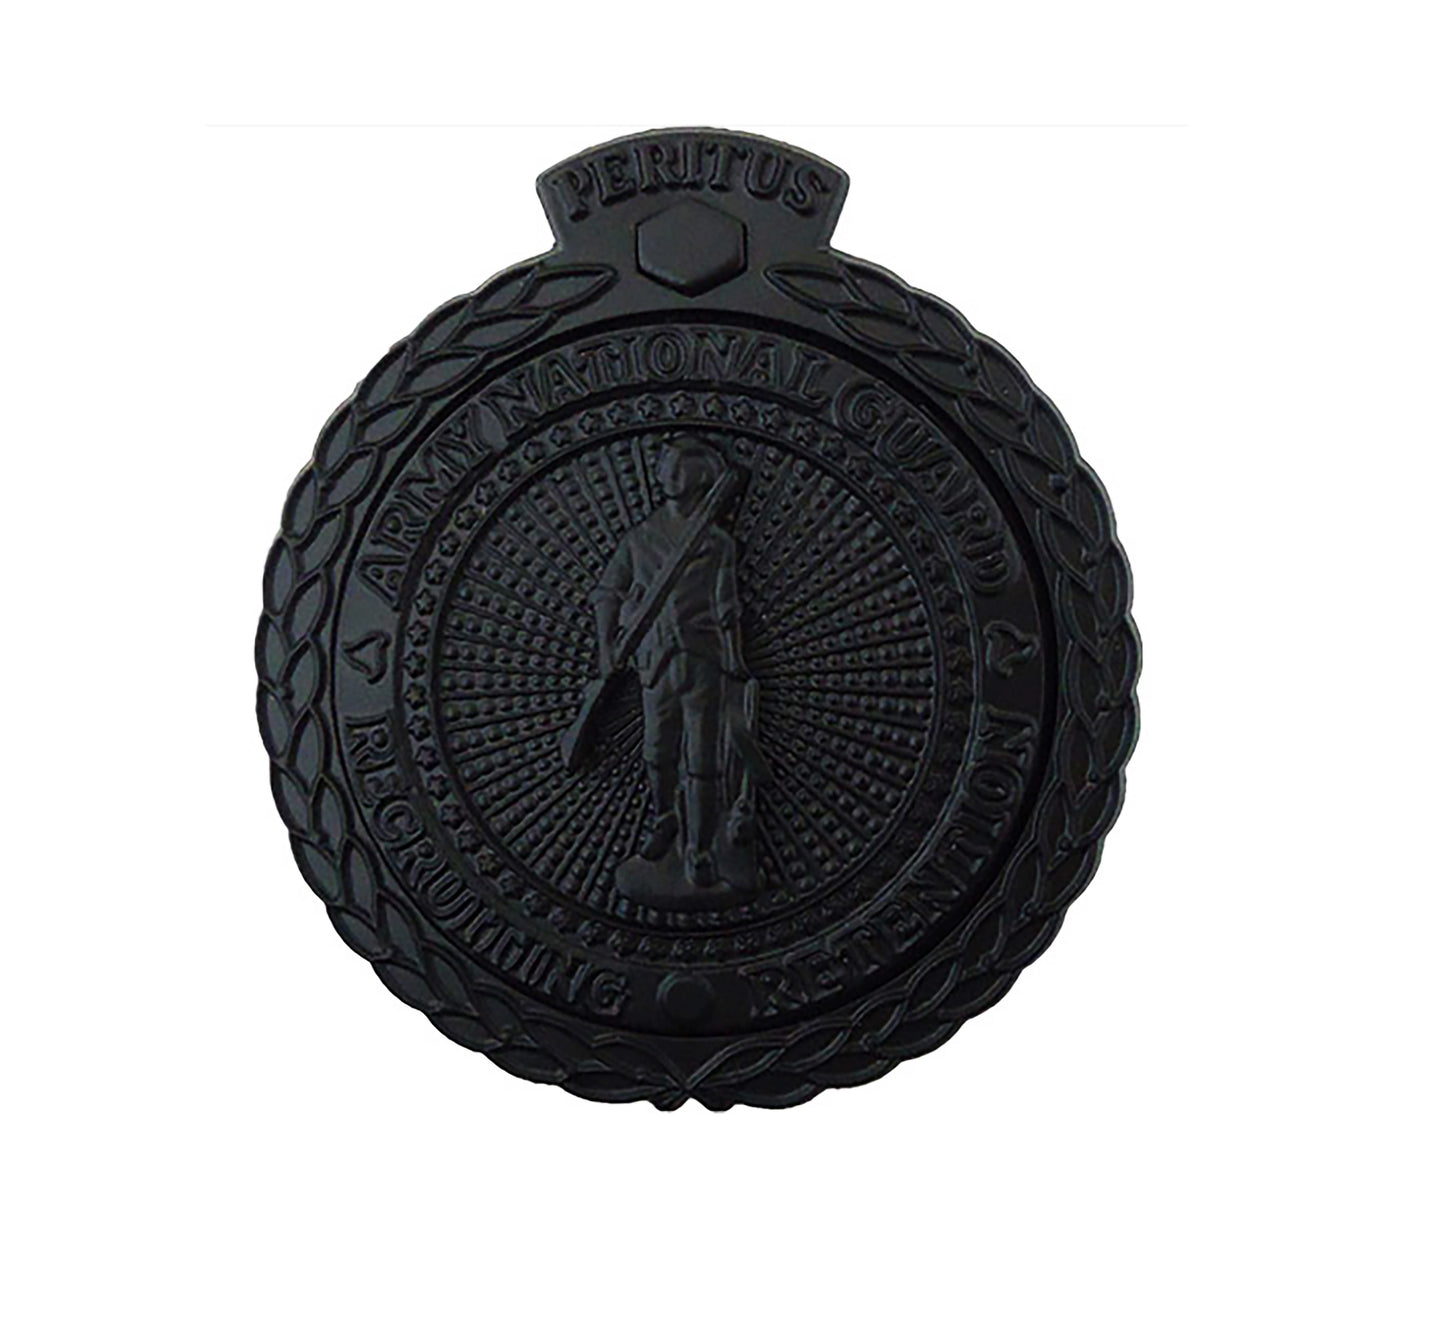 U.S. Army National Guard Recruiting Retention STA-BRITE® BLACK Metal Master Badge